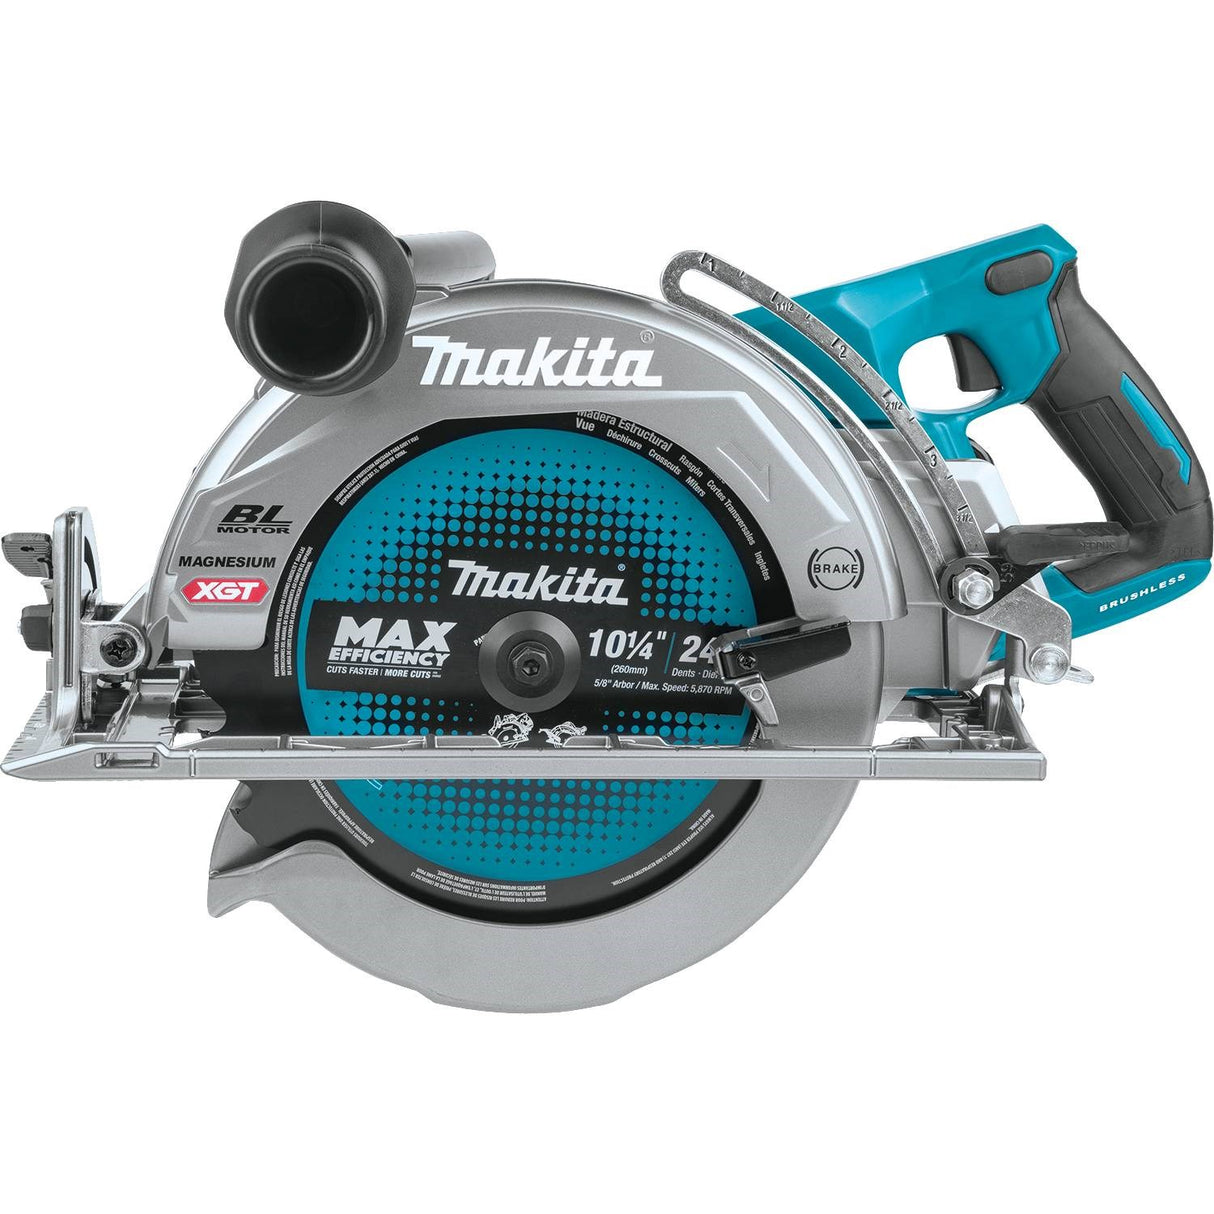 Makita GSR02M1 40V max XGT® Rear Handle 10-1/4"Saw Kit - 5